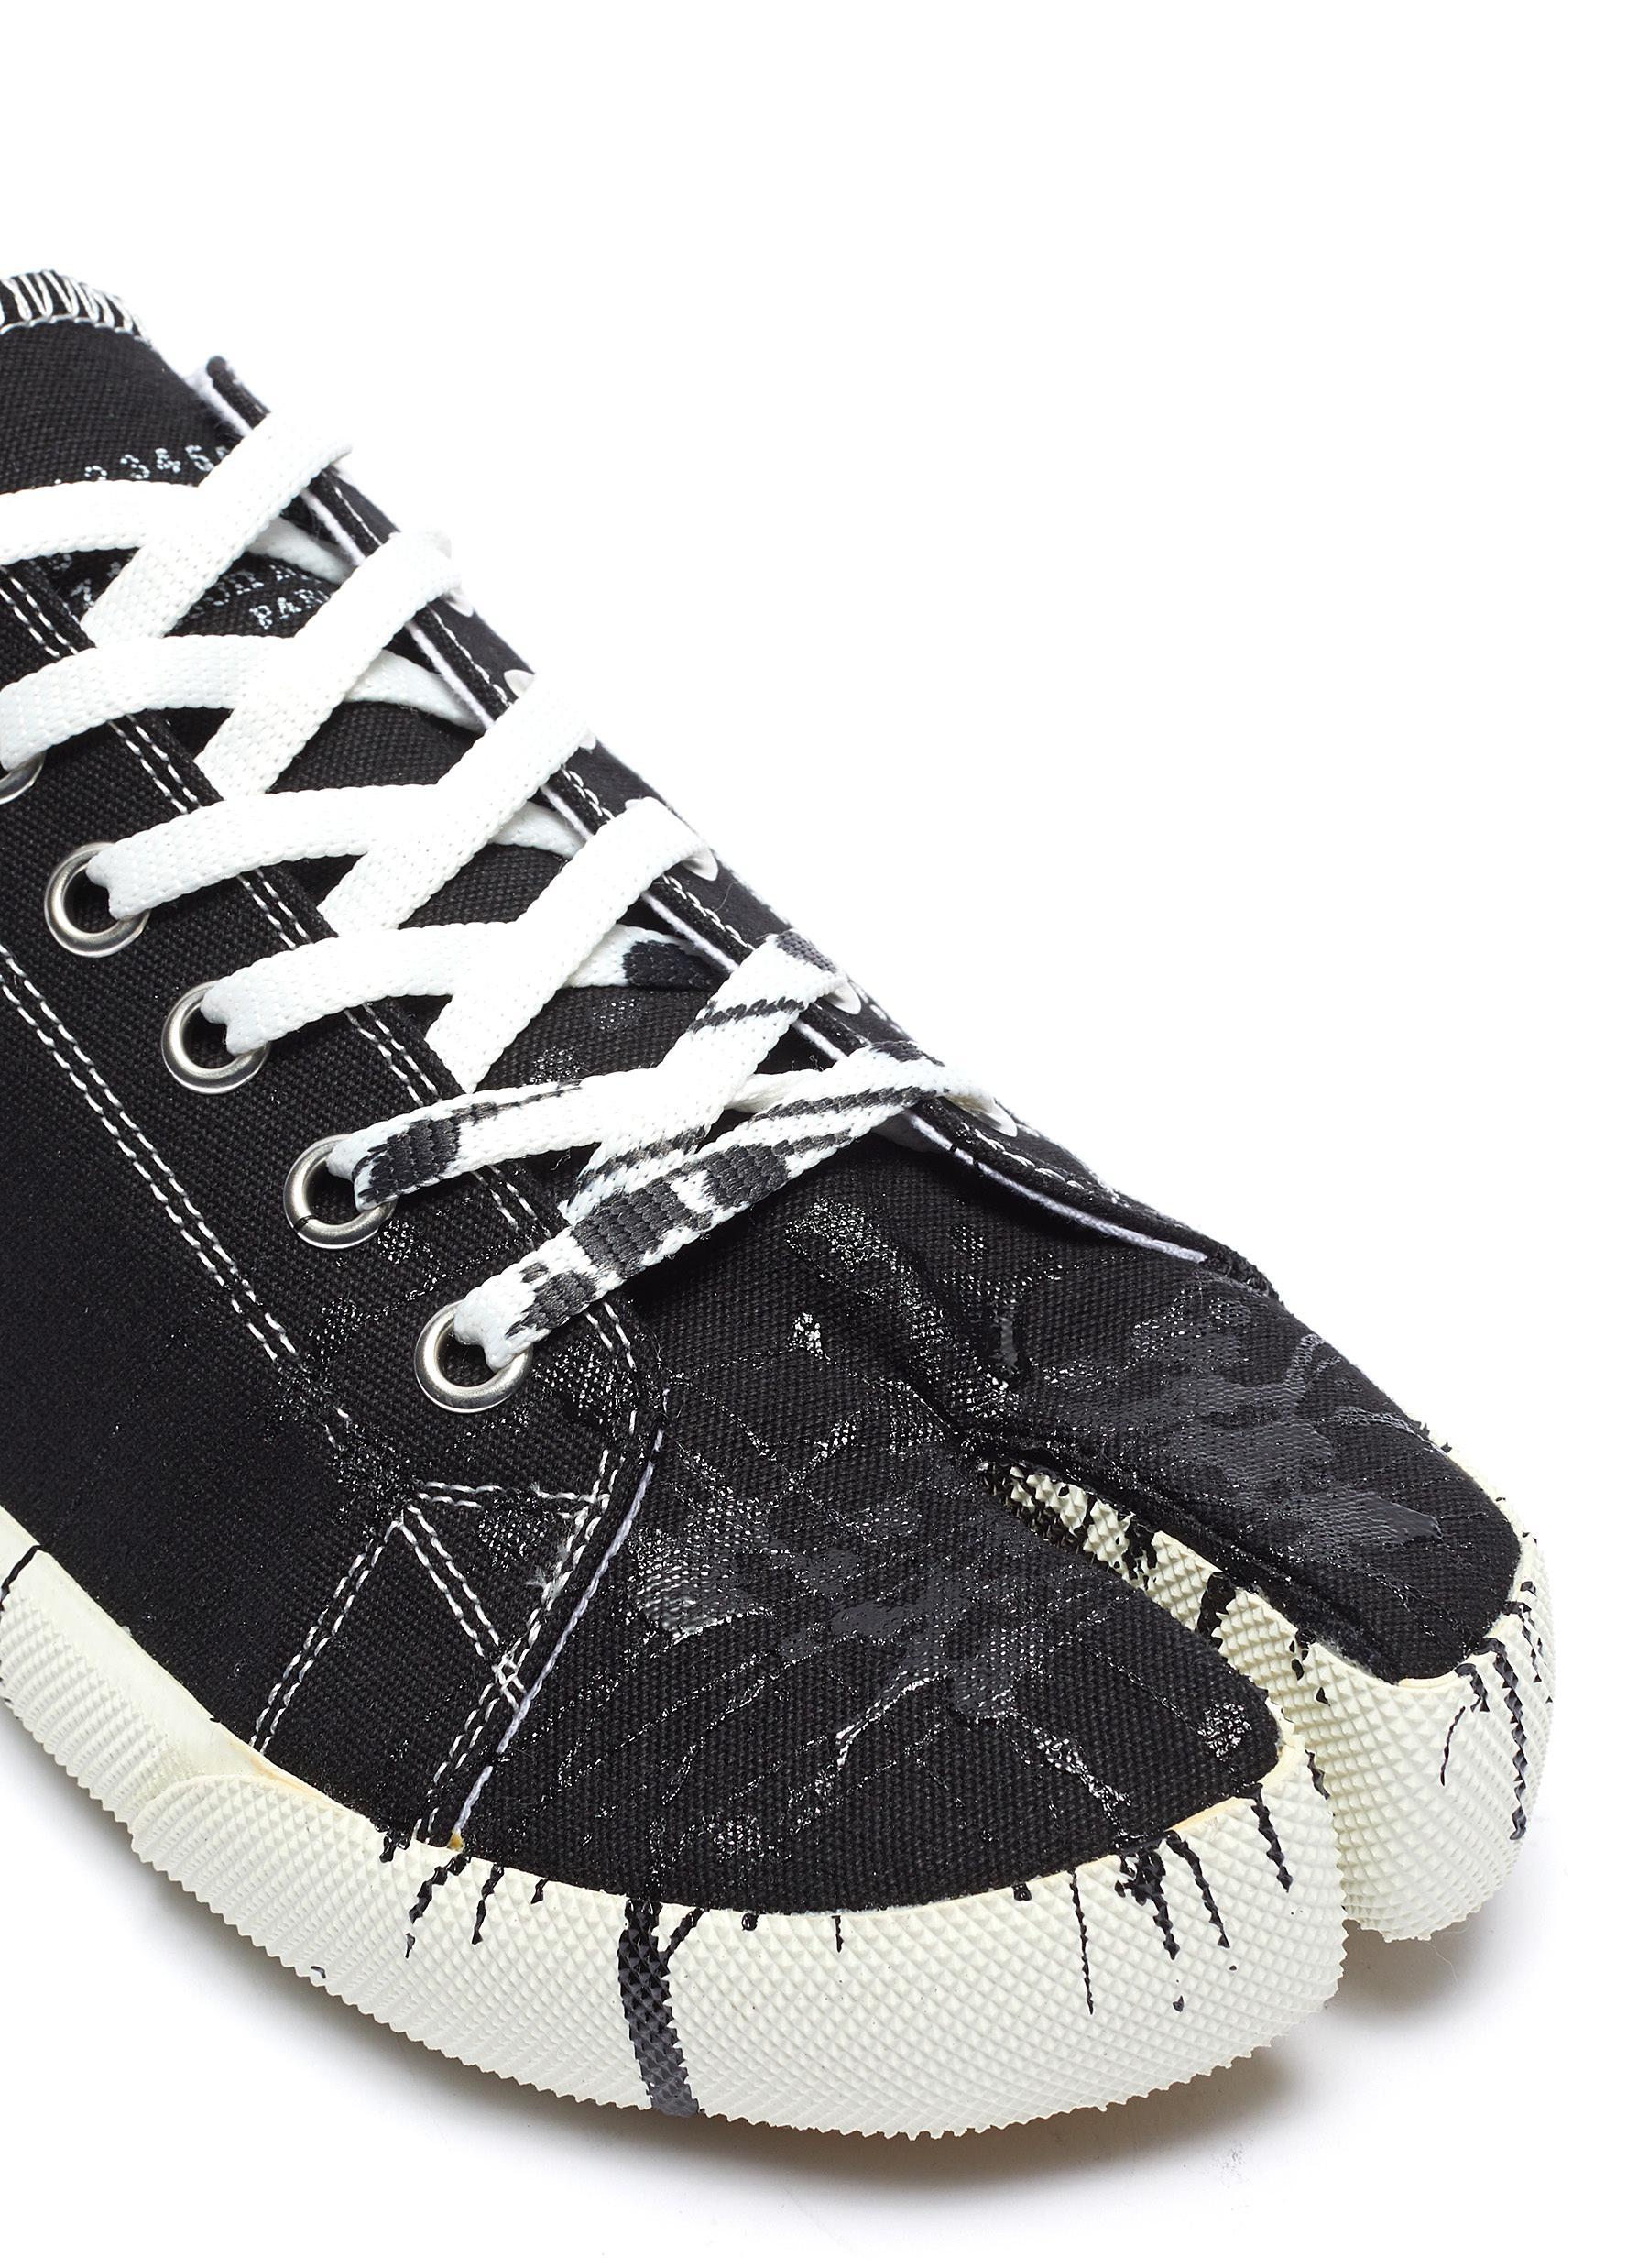 Maison Margiela 'tabi' Paint Splatter Canvas Sneakers in Black for Men